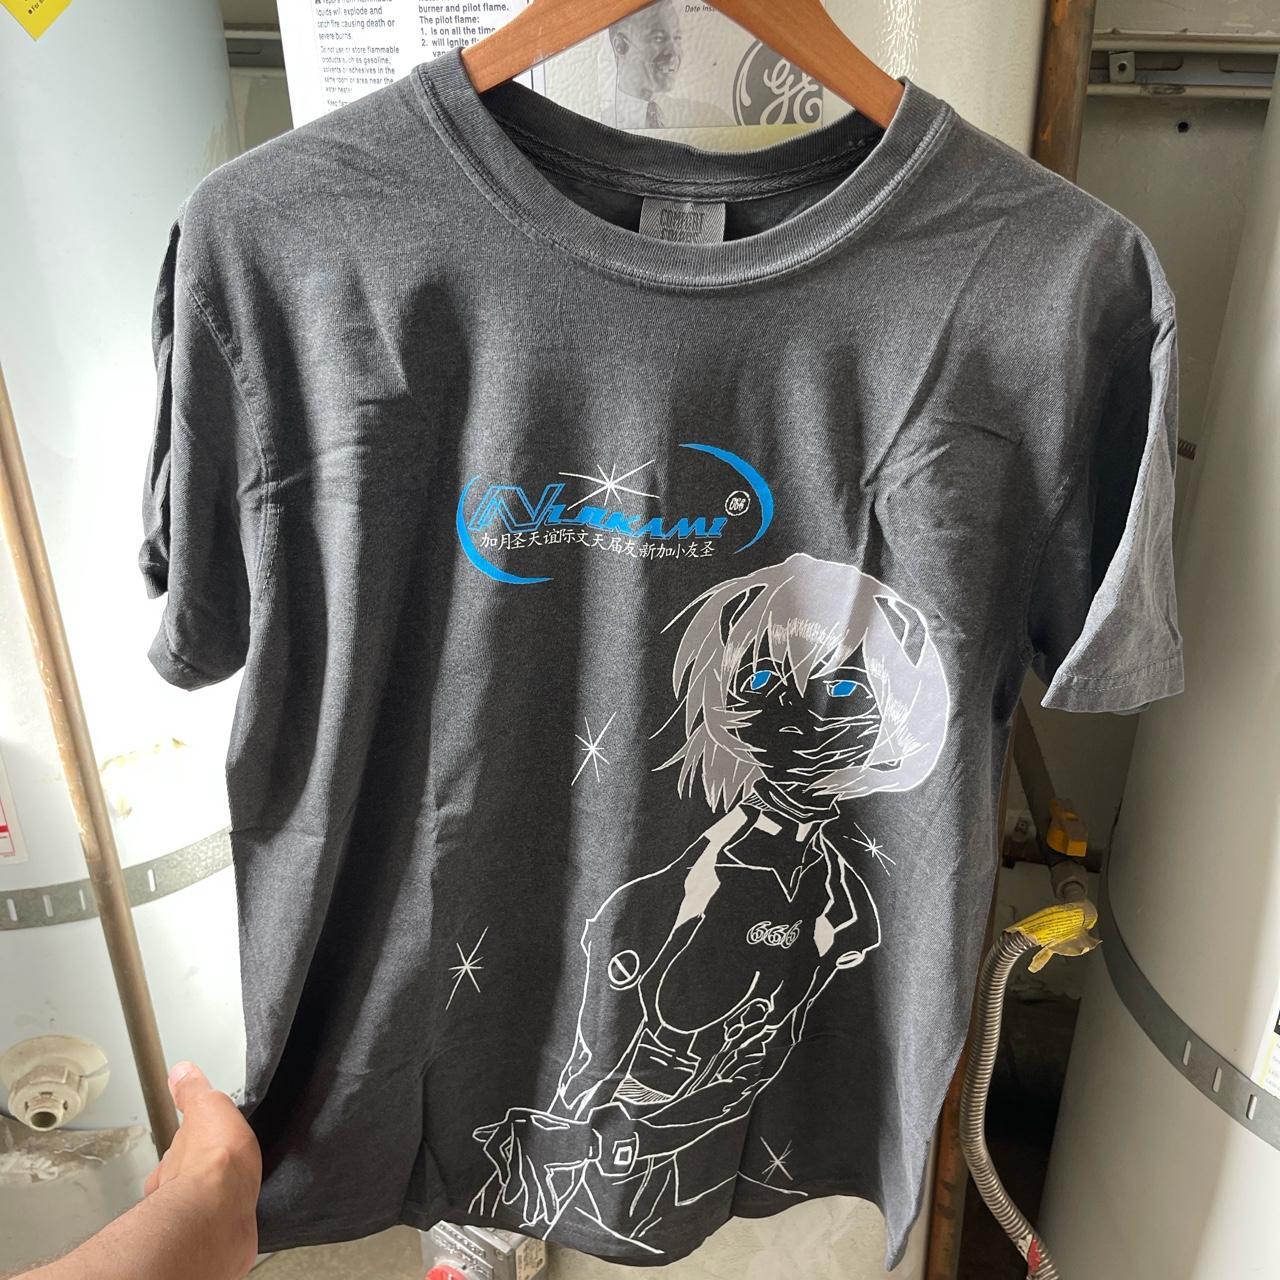 Akira Iconic Vision  Black TShirt with Striking Front Image and Bol   Vintage Band Shirts